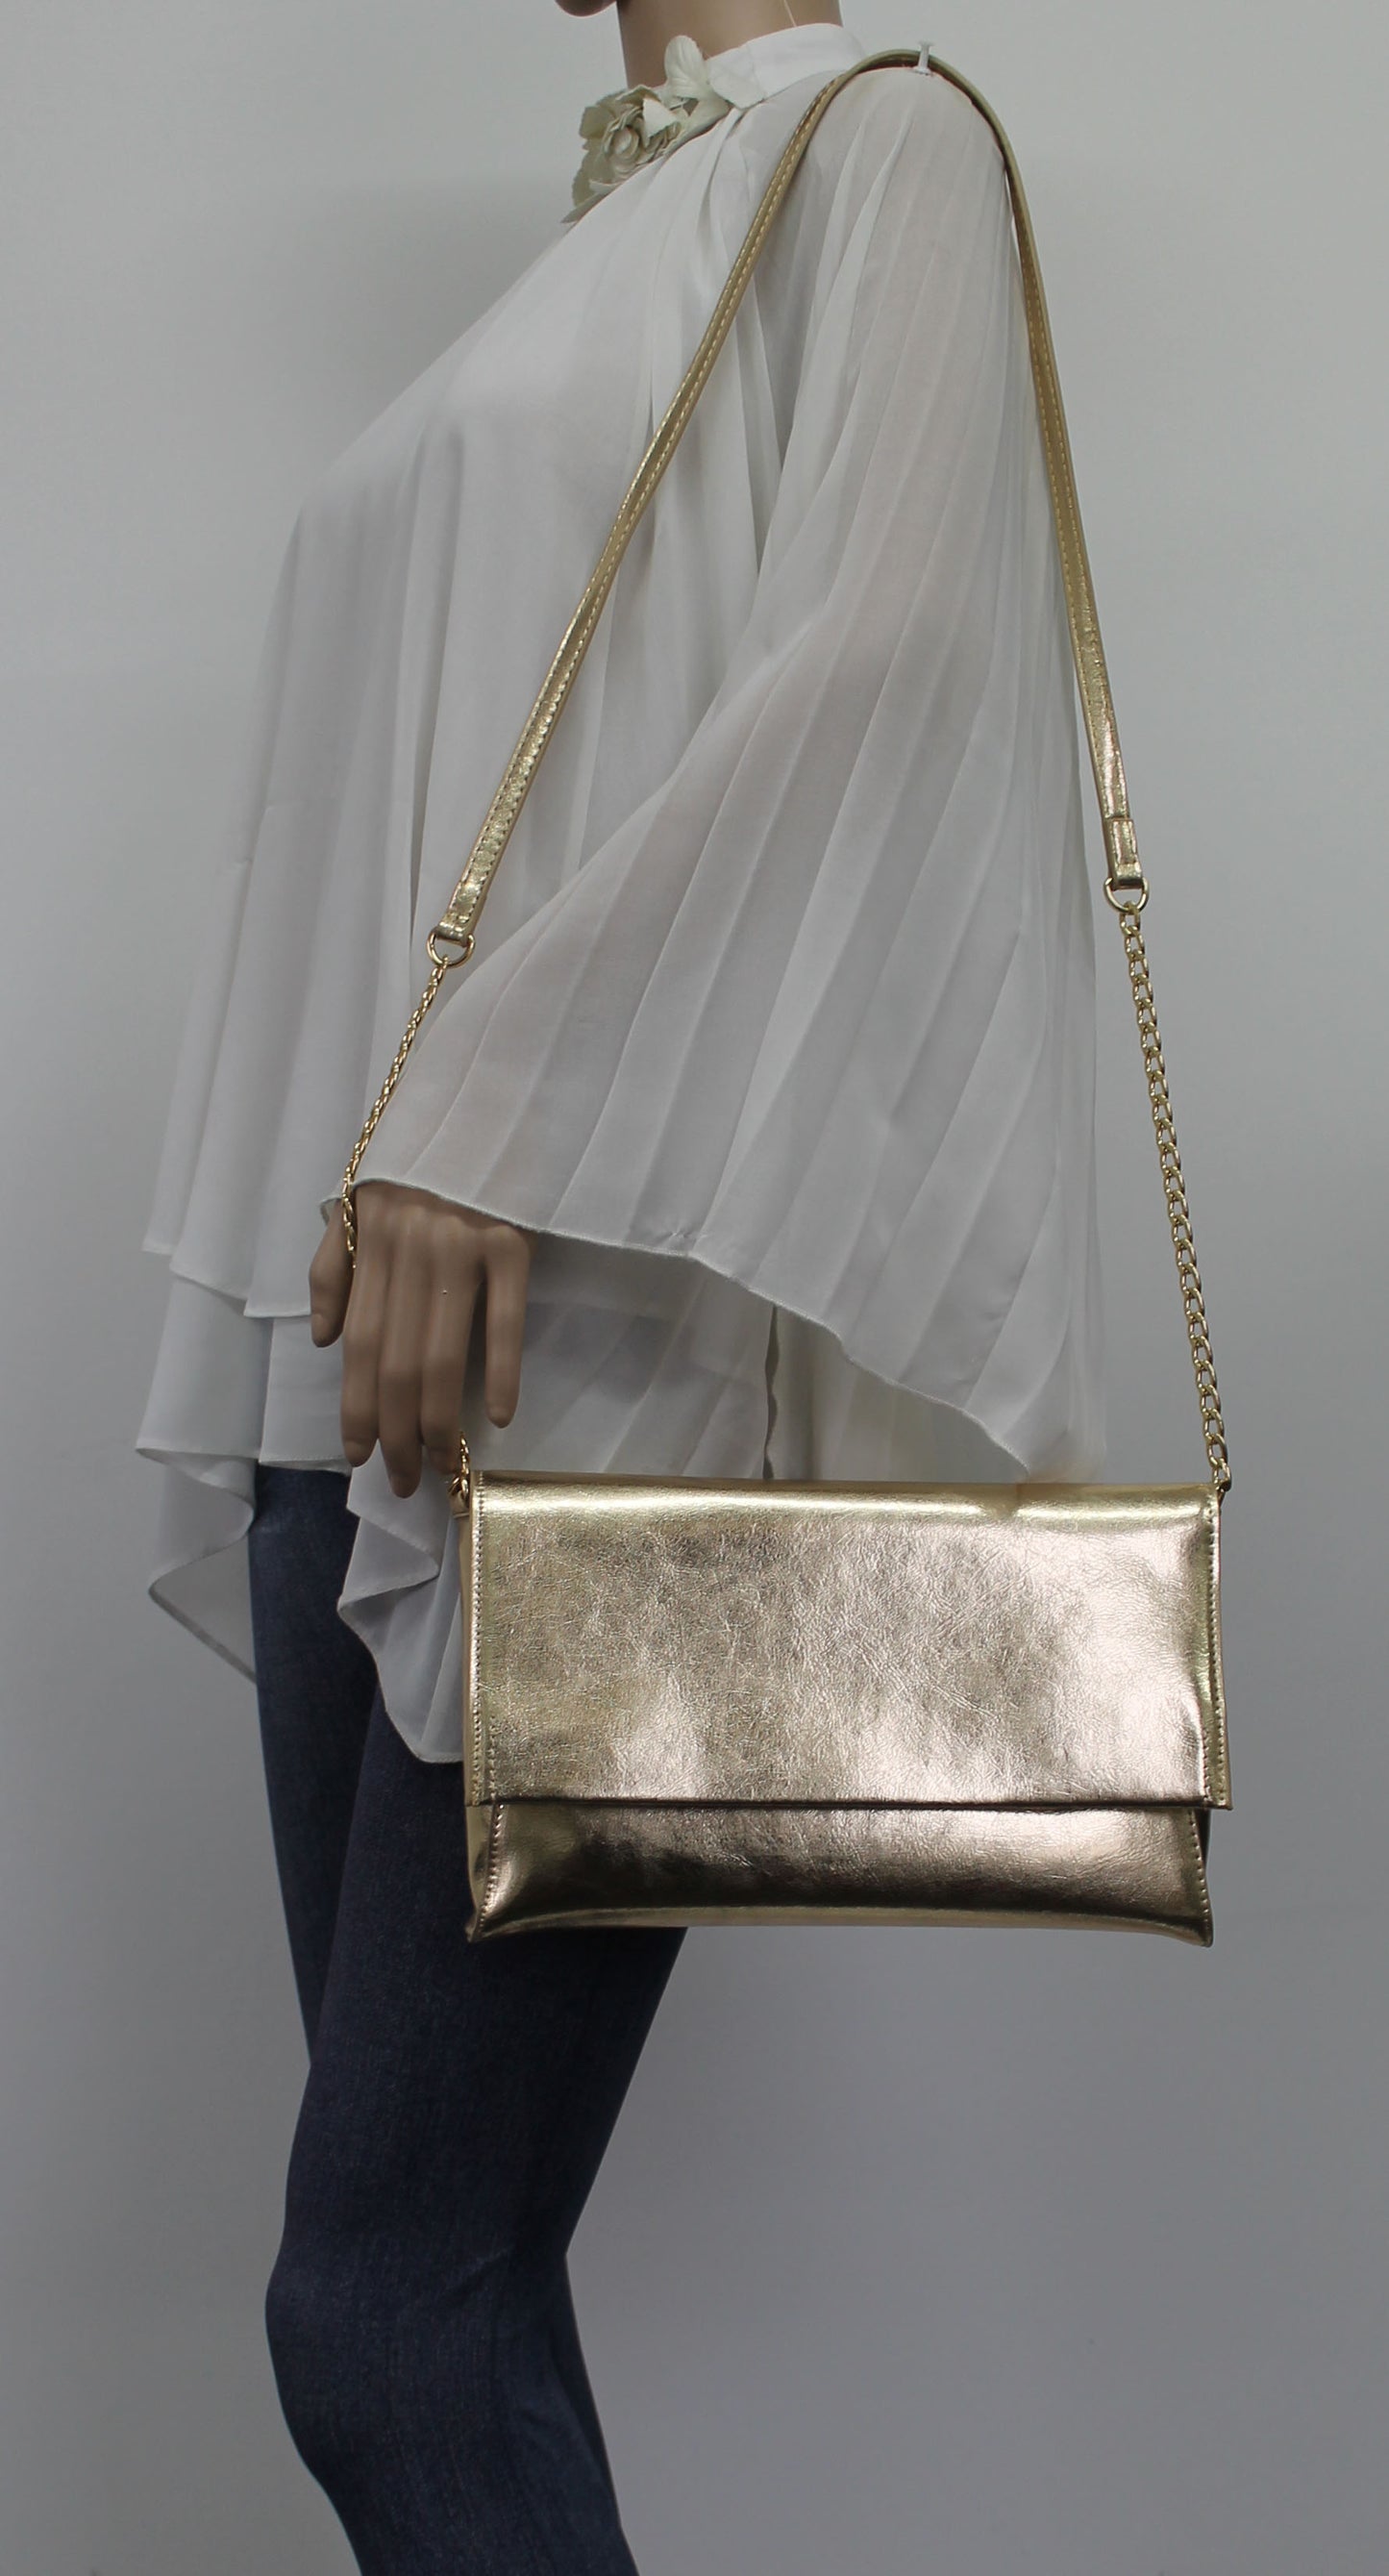 SWANKYSWANS Jenna Clutch Bag Gold Cute Cheap Clutch Bag For Weddings School and Work